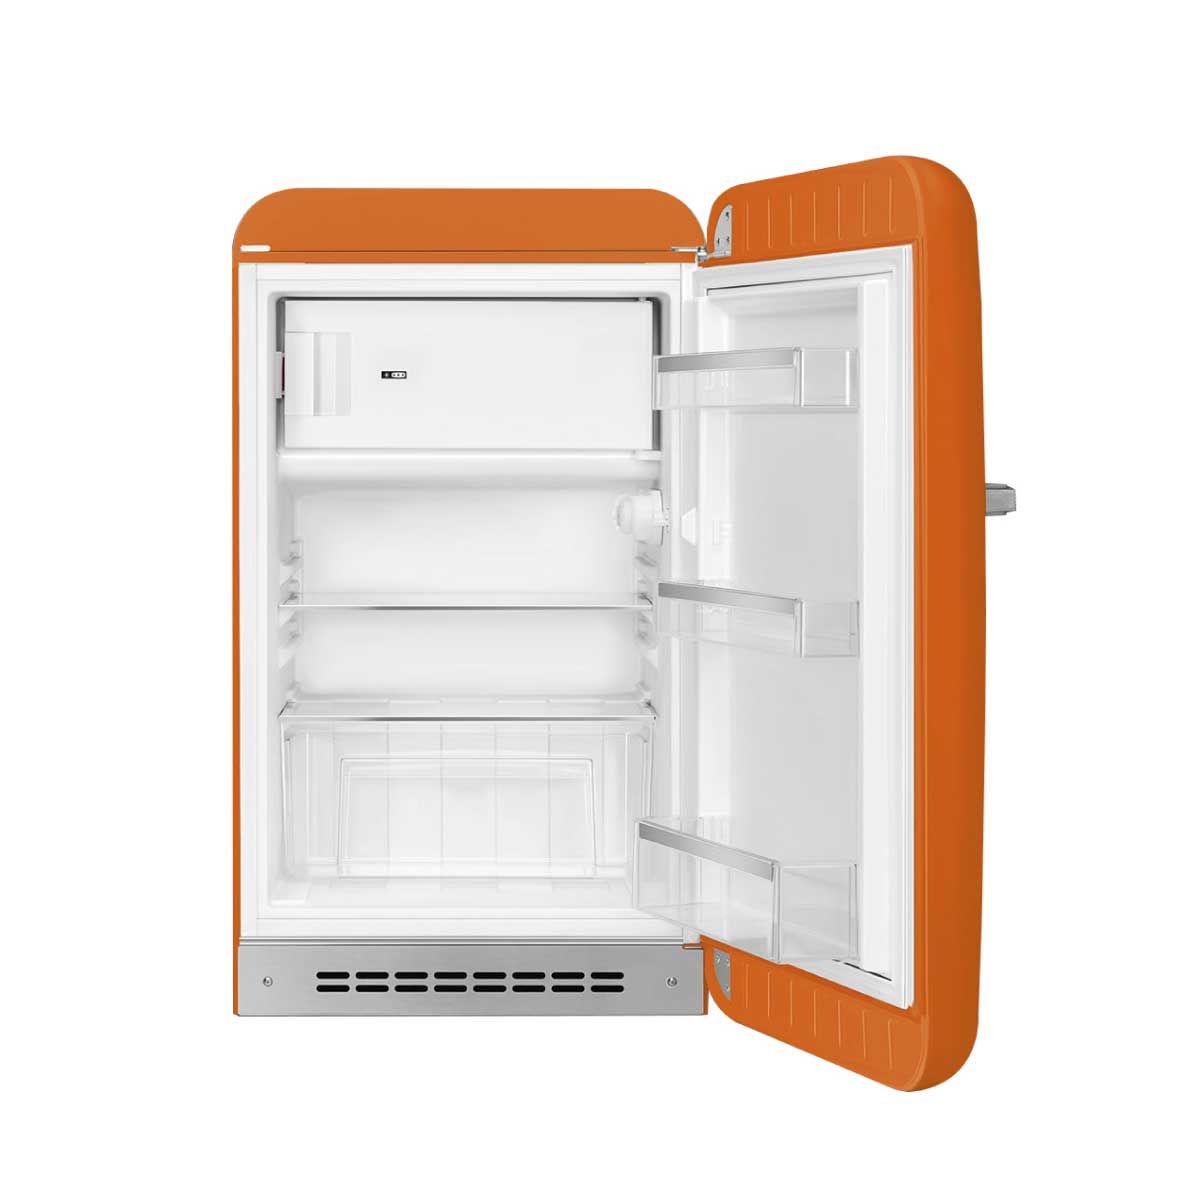 SMEG ตู้เย็น 1 ประตู 4.3 Q สไตล์ 50 Retro Aesthetic รุ่น FAB10ROR5 สีส้ม